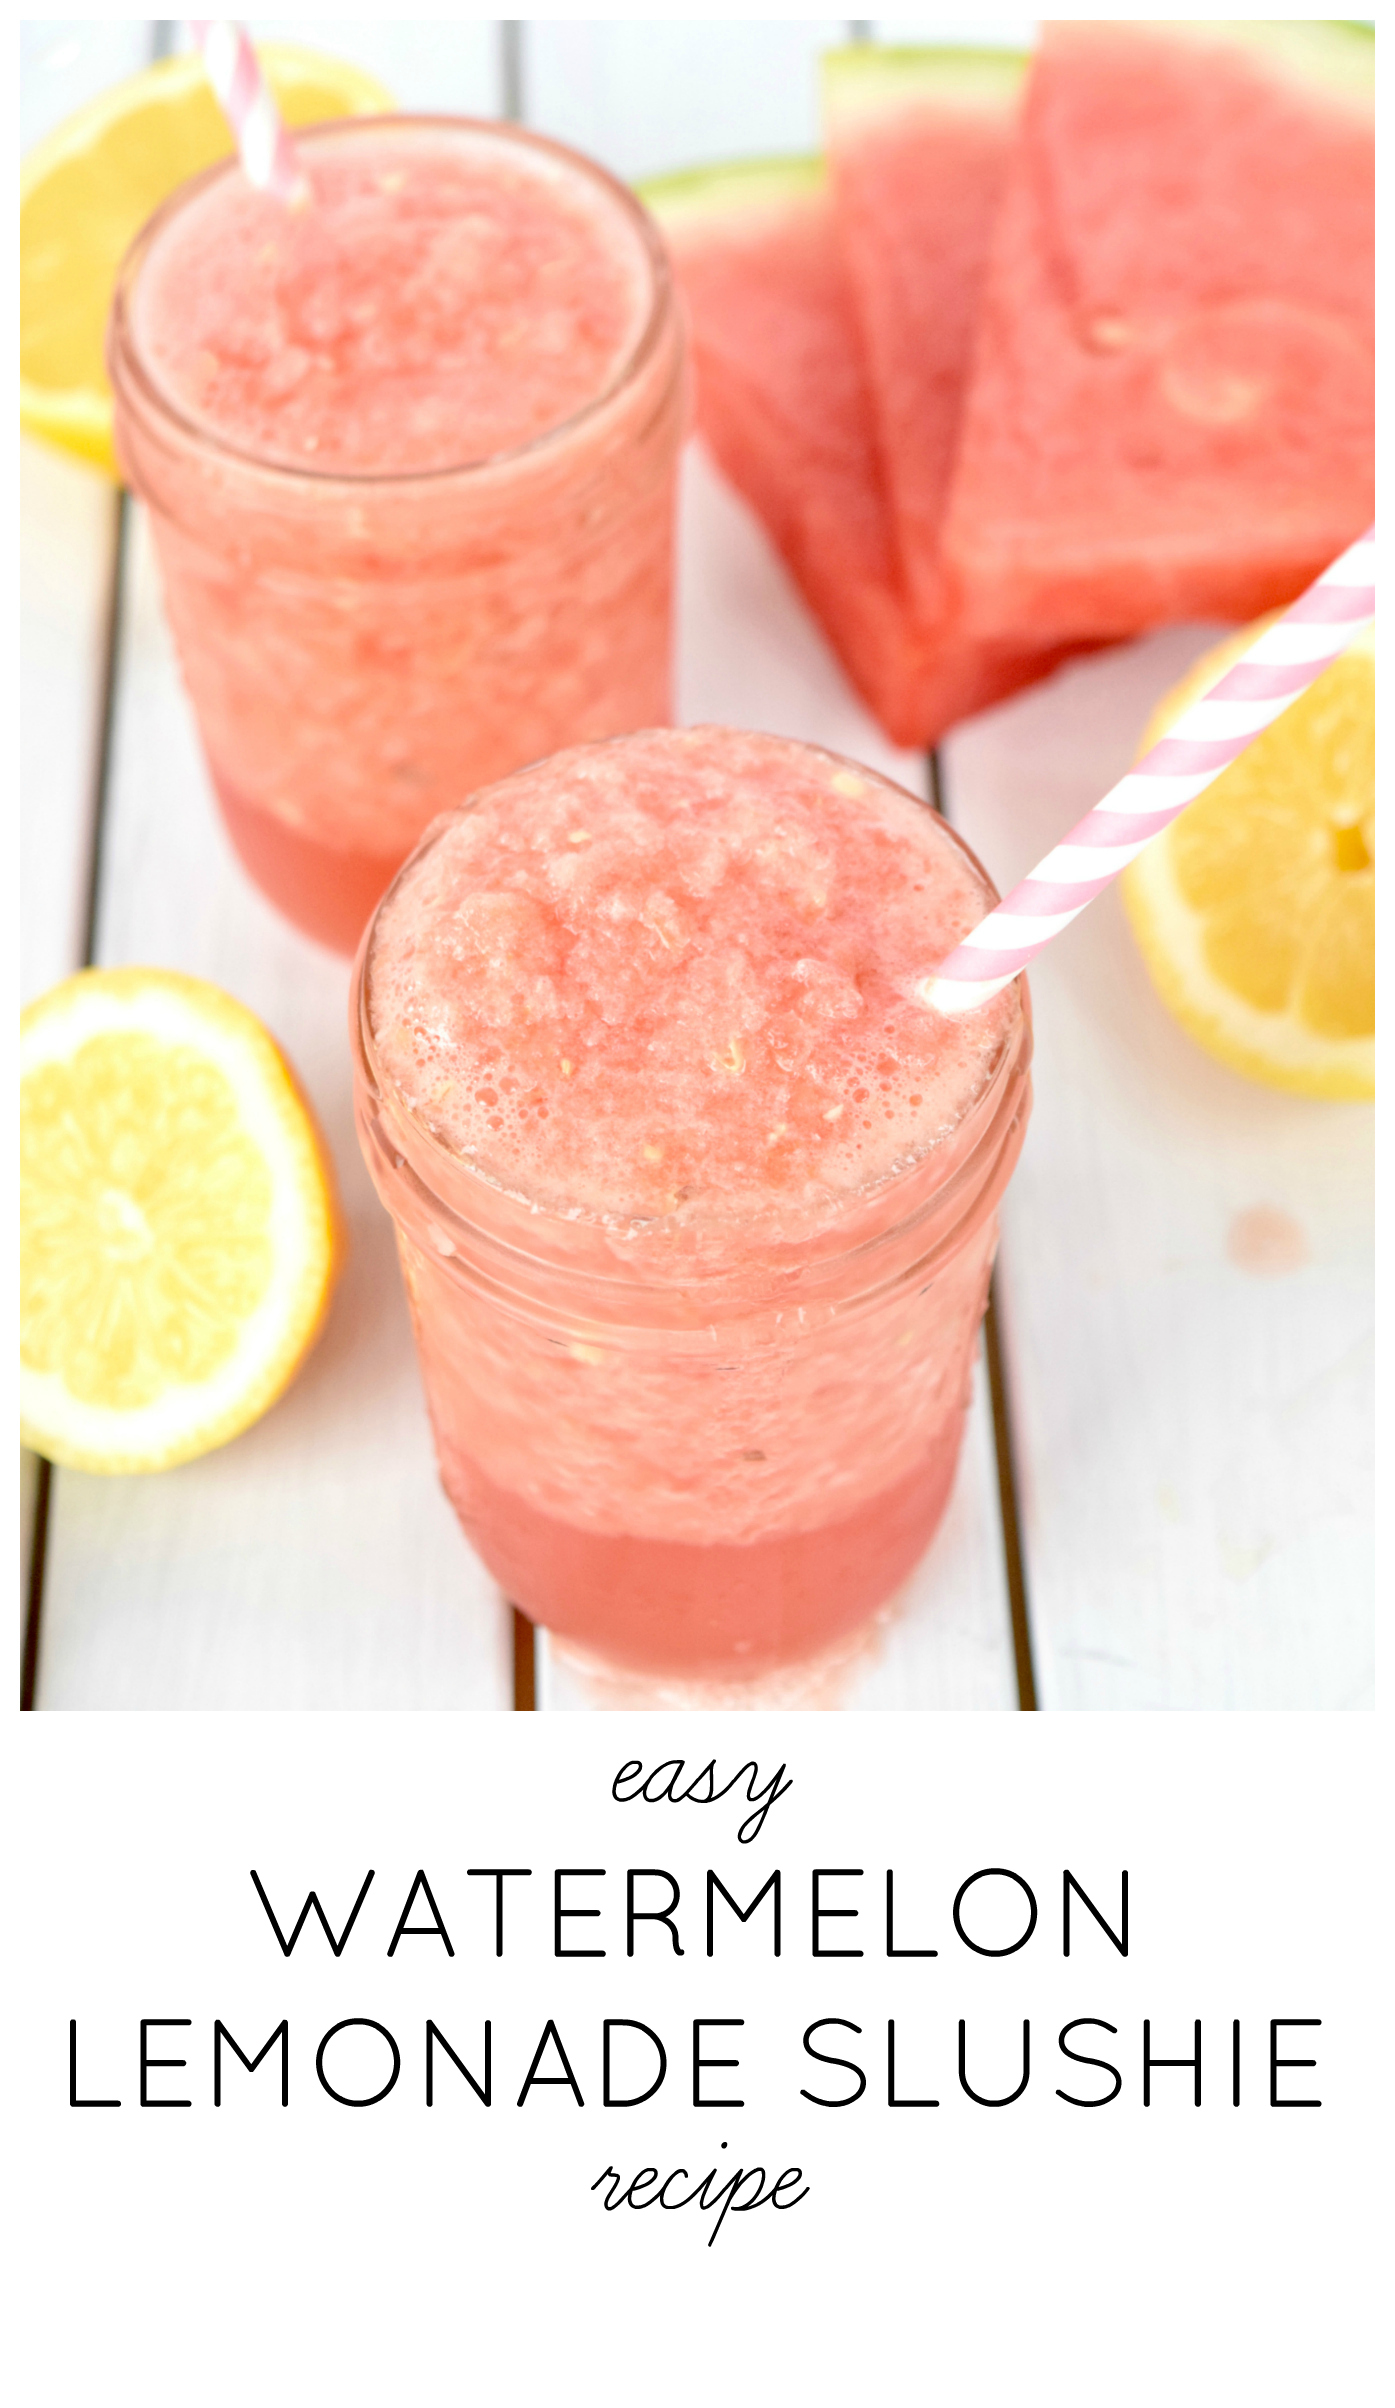 Watermelon Lemonade Slushie Recipe